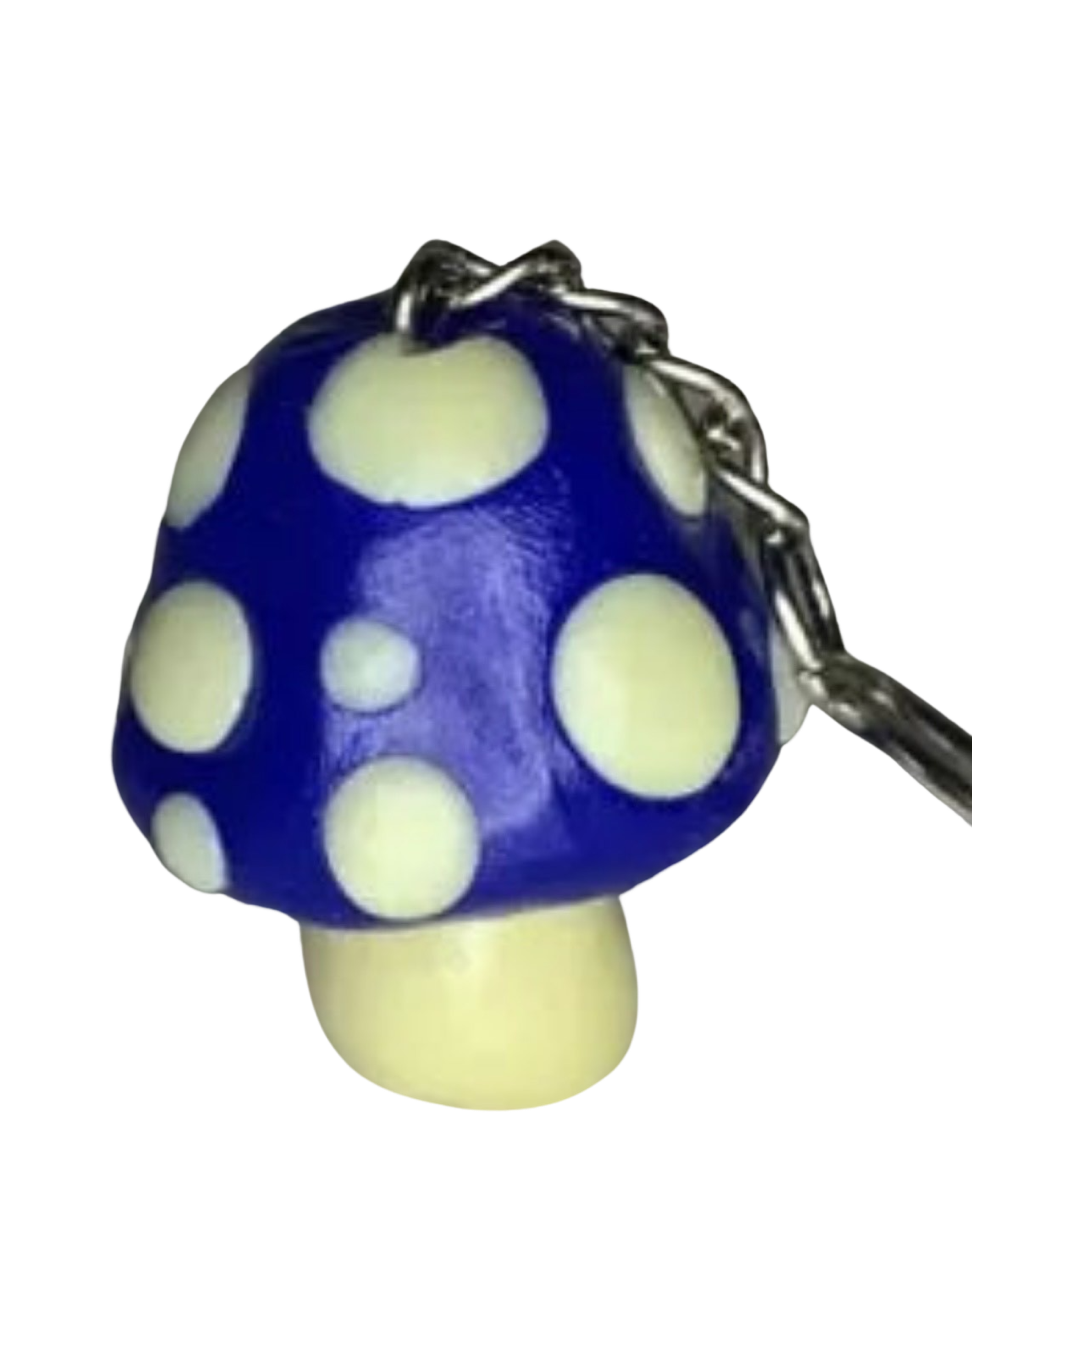 Blue and Glow-in-the-Dark Spotted Mushroom Keychains, cute, cartoon, stylized, Blacklight, UV reactive, glow